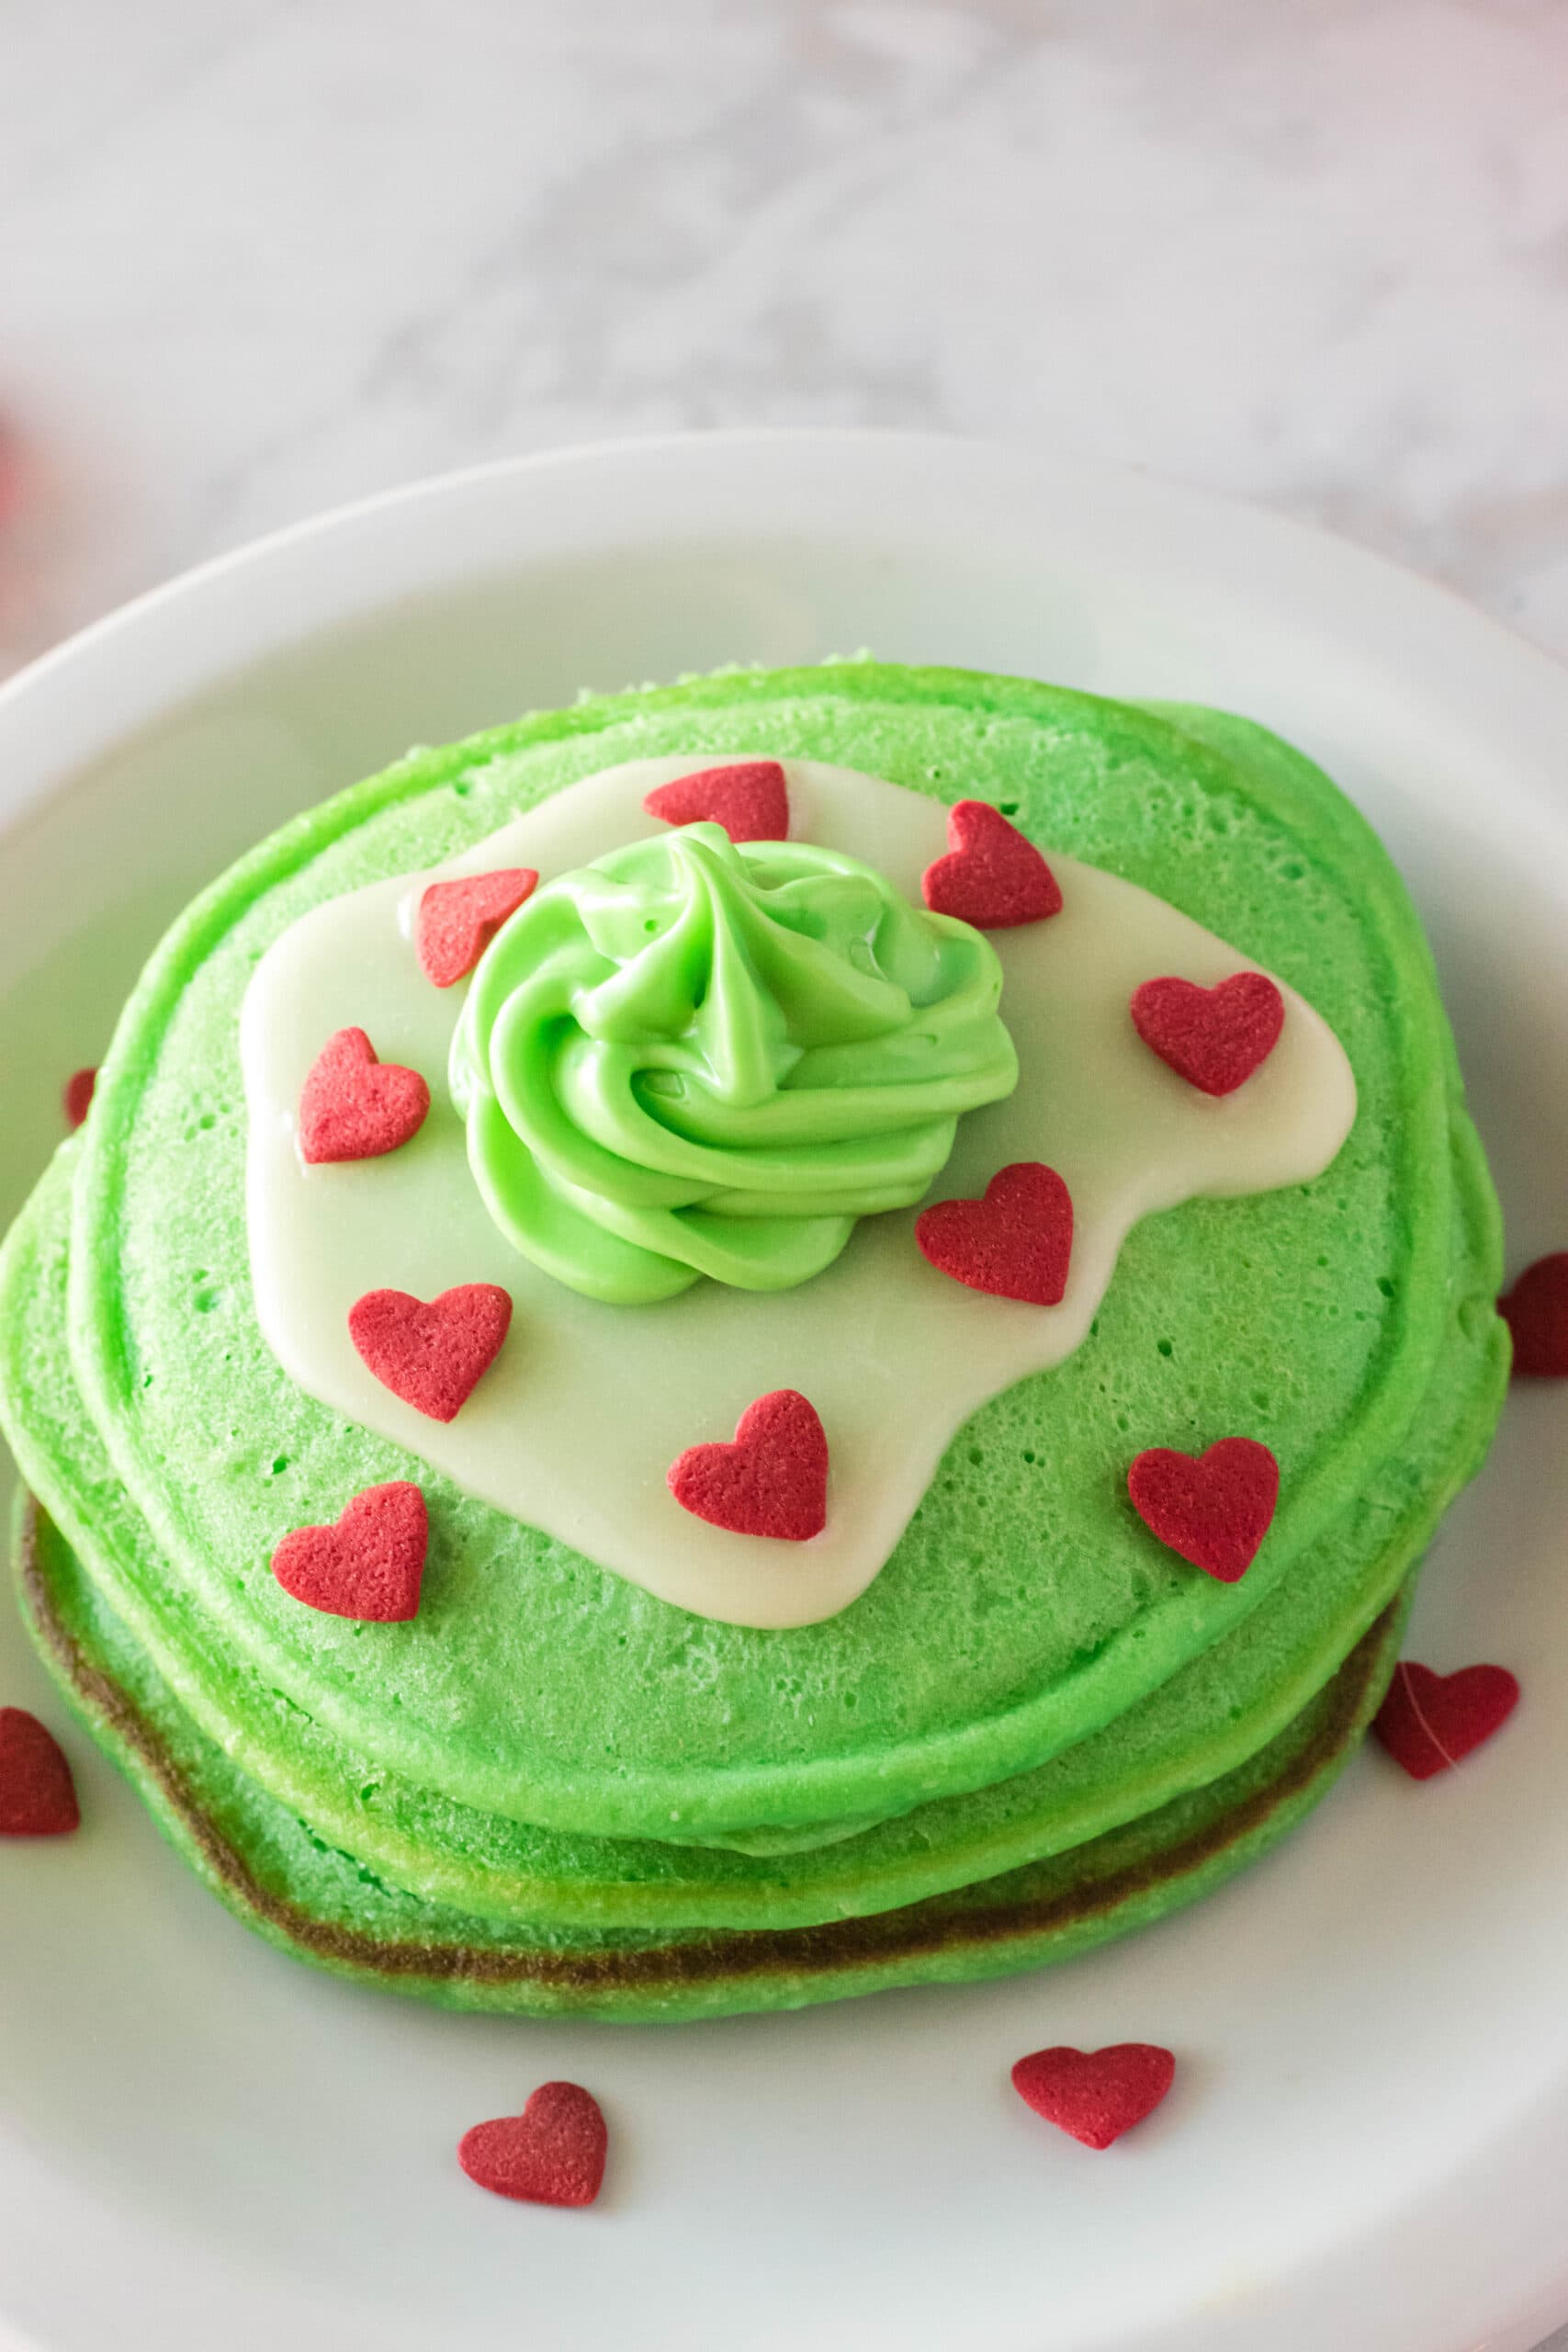 The Best Grinch Pancake Recipe » Homemade Heather